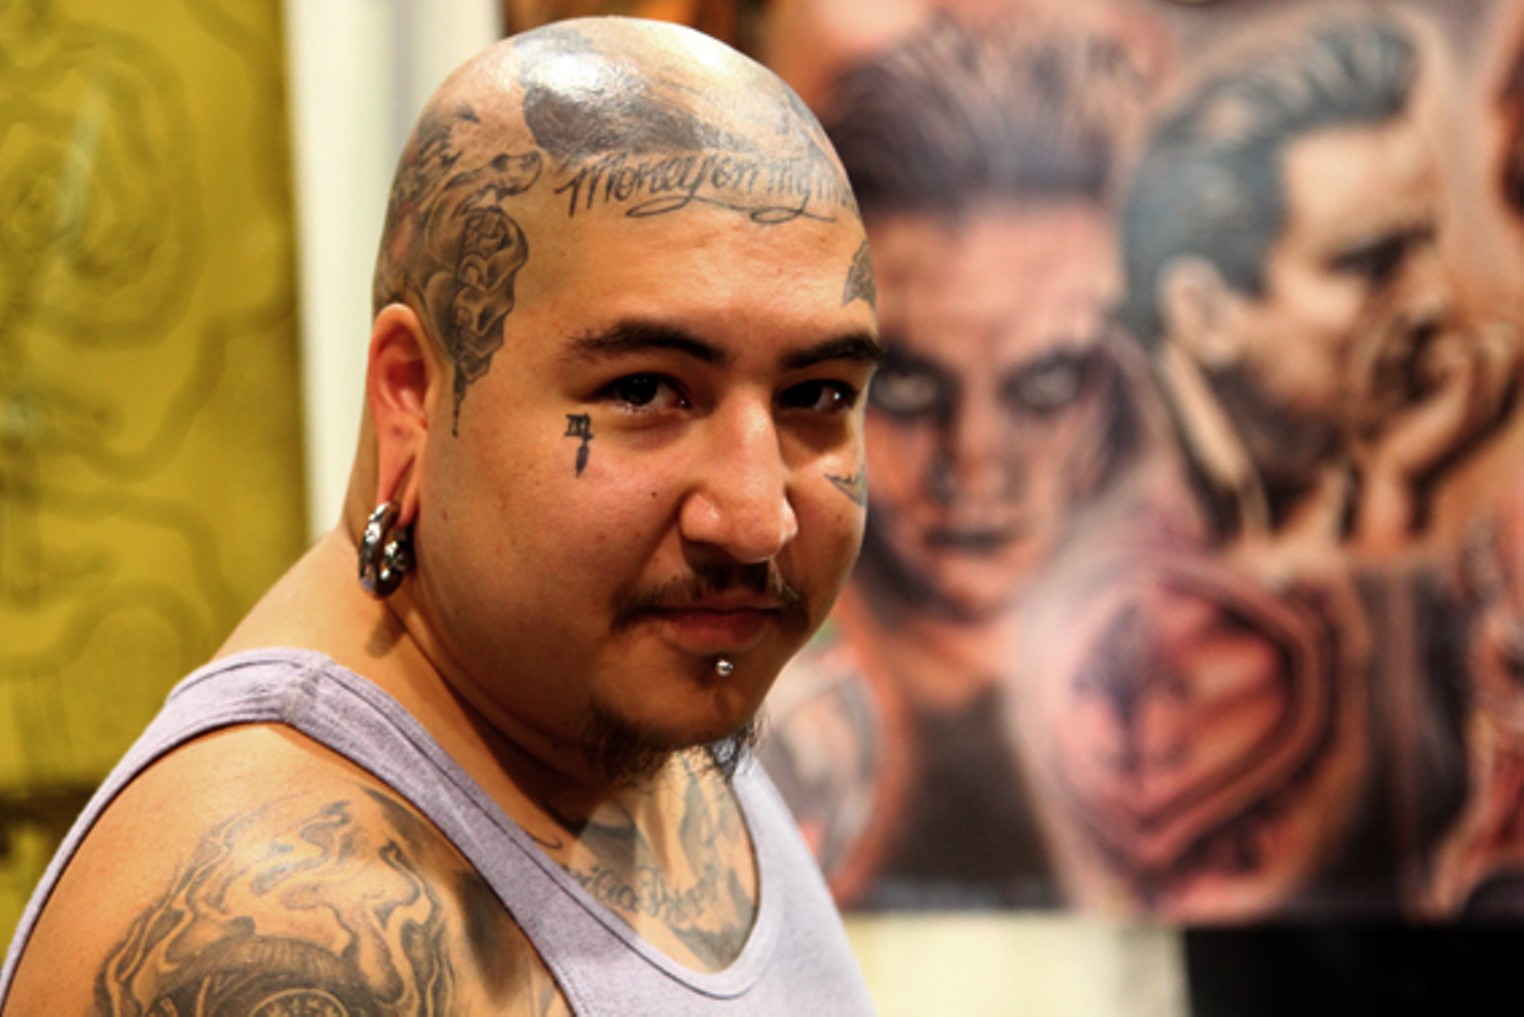 Catch Artist Blxck Santos Vagos  The Bloodline Tattooz Crew for the  Villain Arts Arts 3rd Annual Dallas Tattoo Arts Festival Aug  Instagram